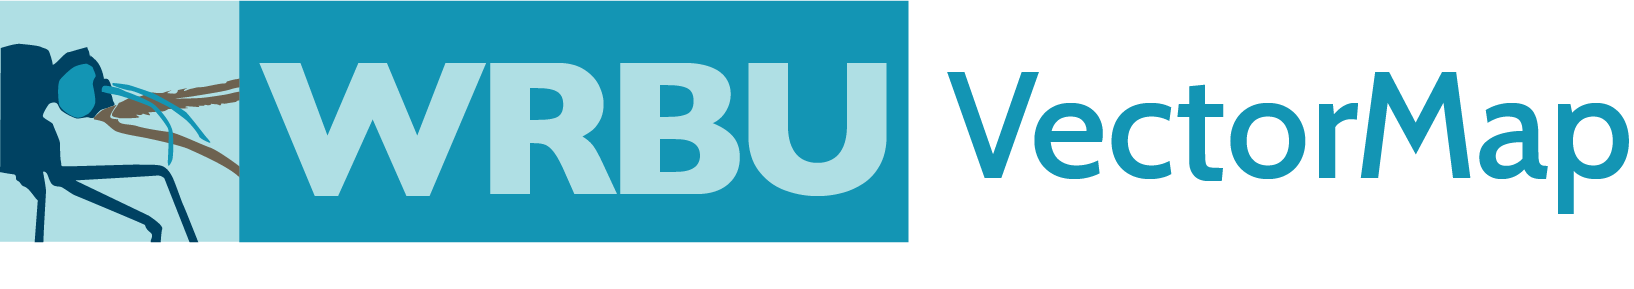 WRBU logo